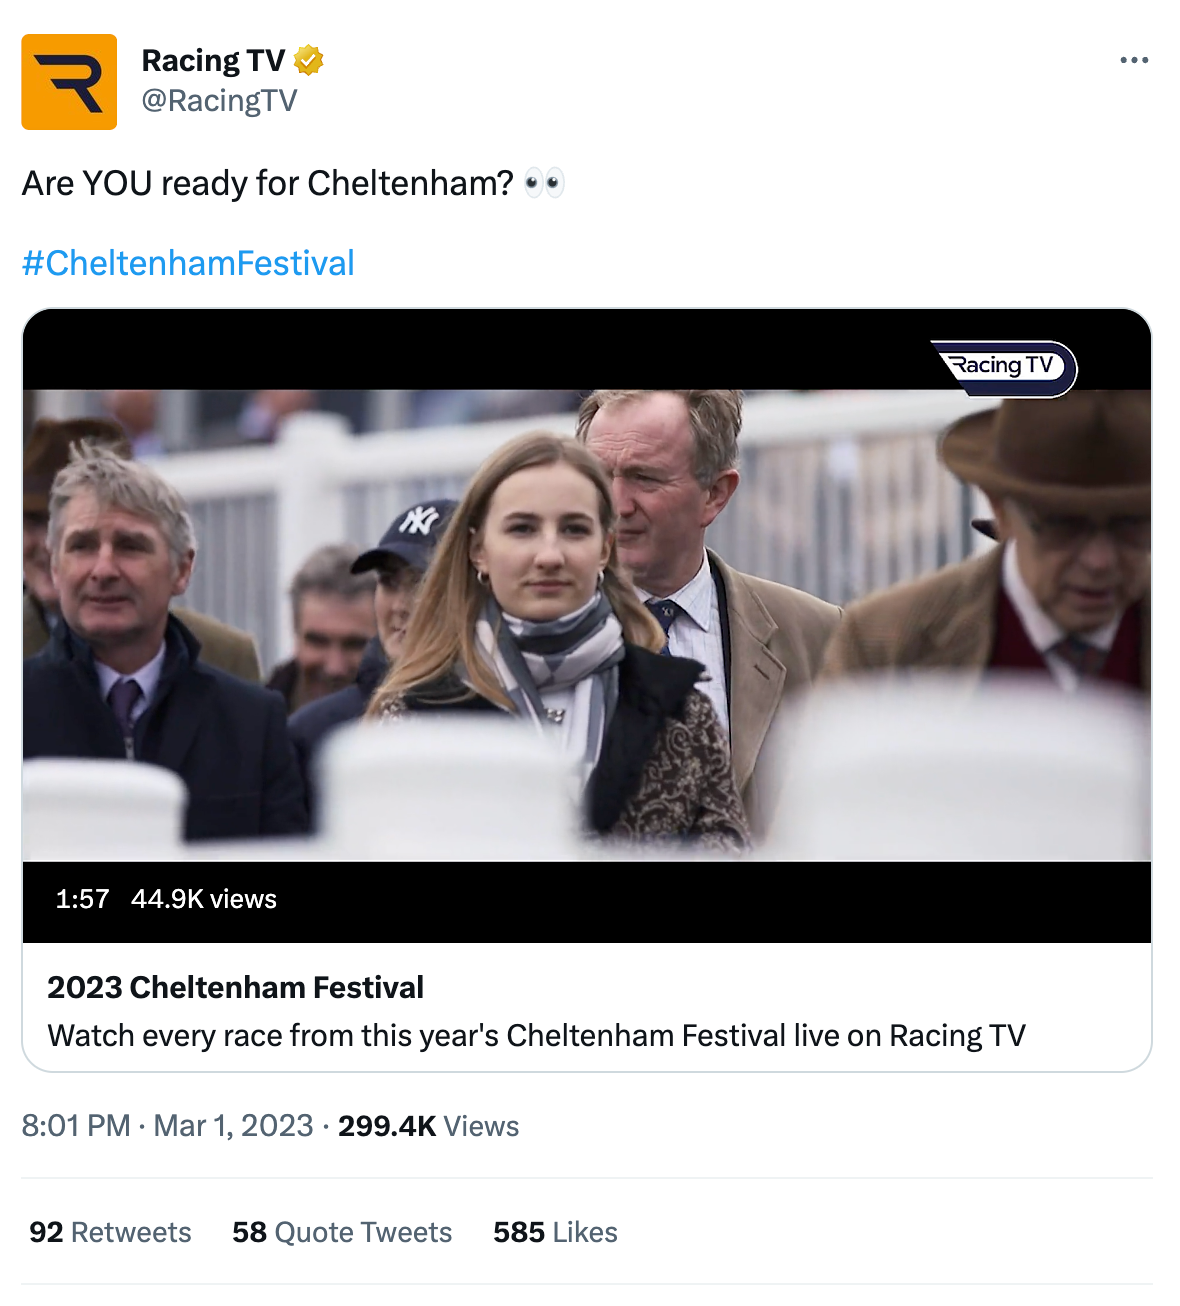 RacingTV Cheltenham Festival promotional video.